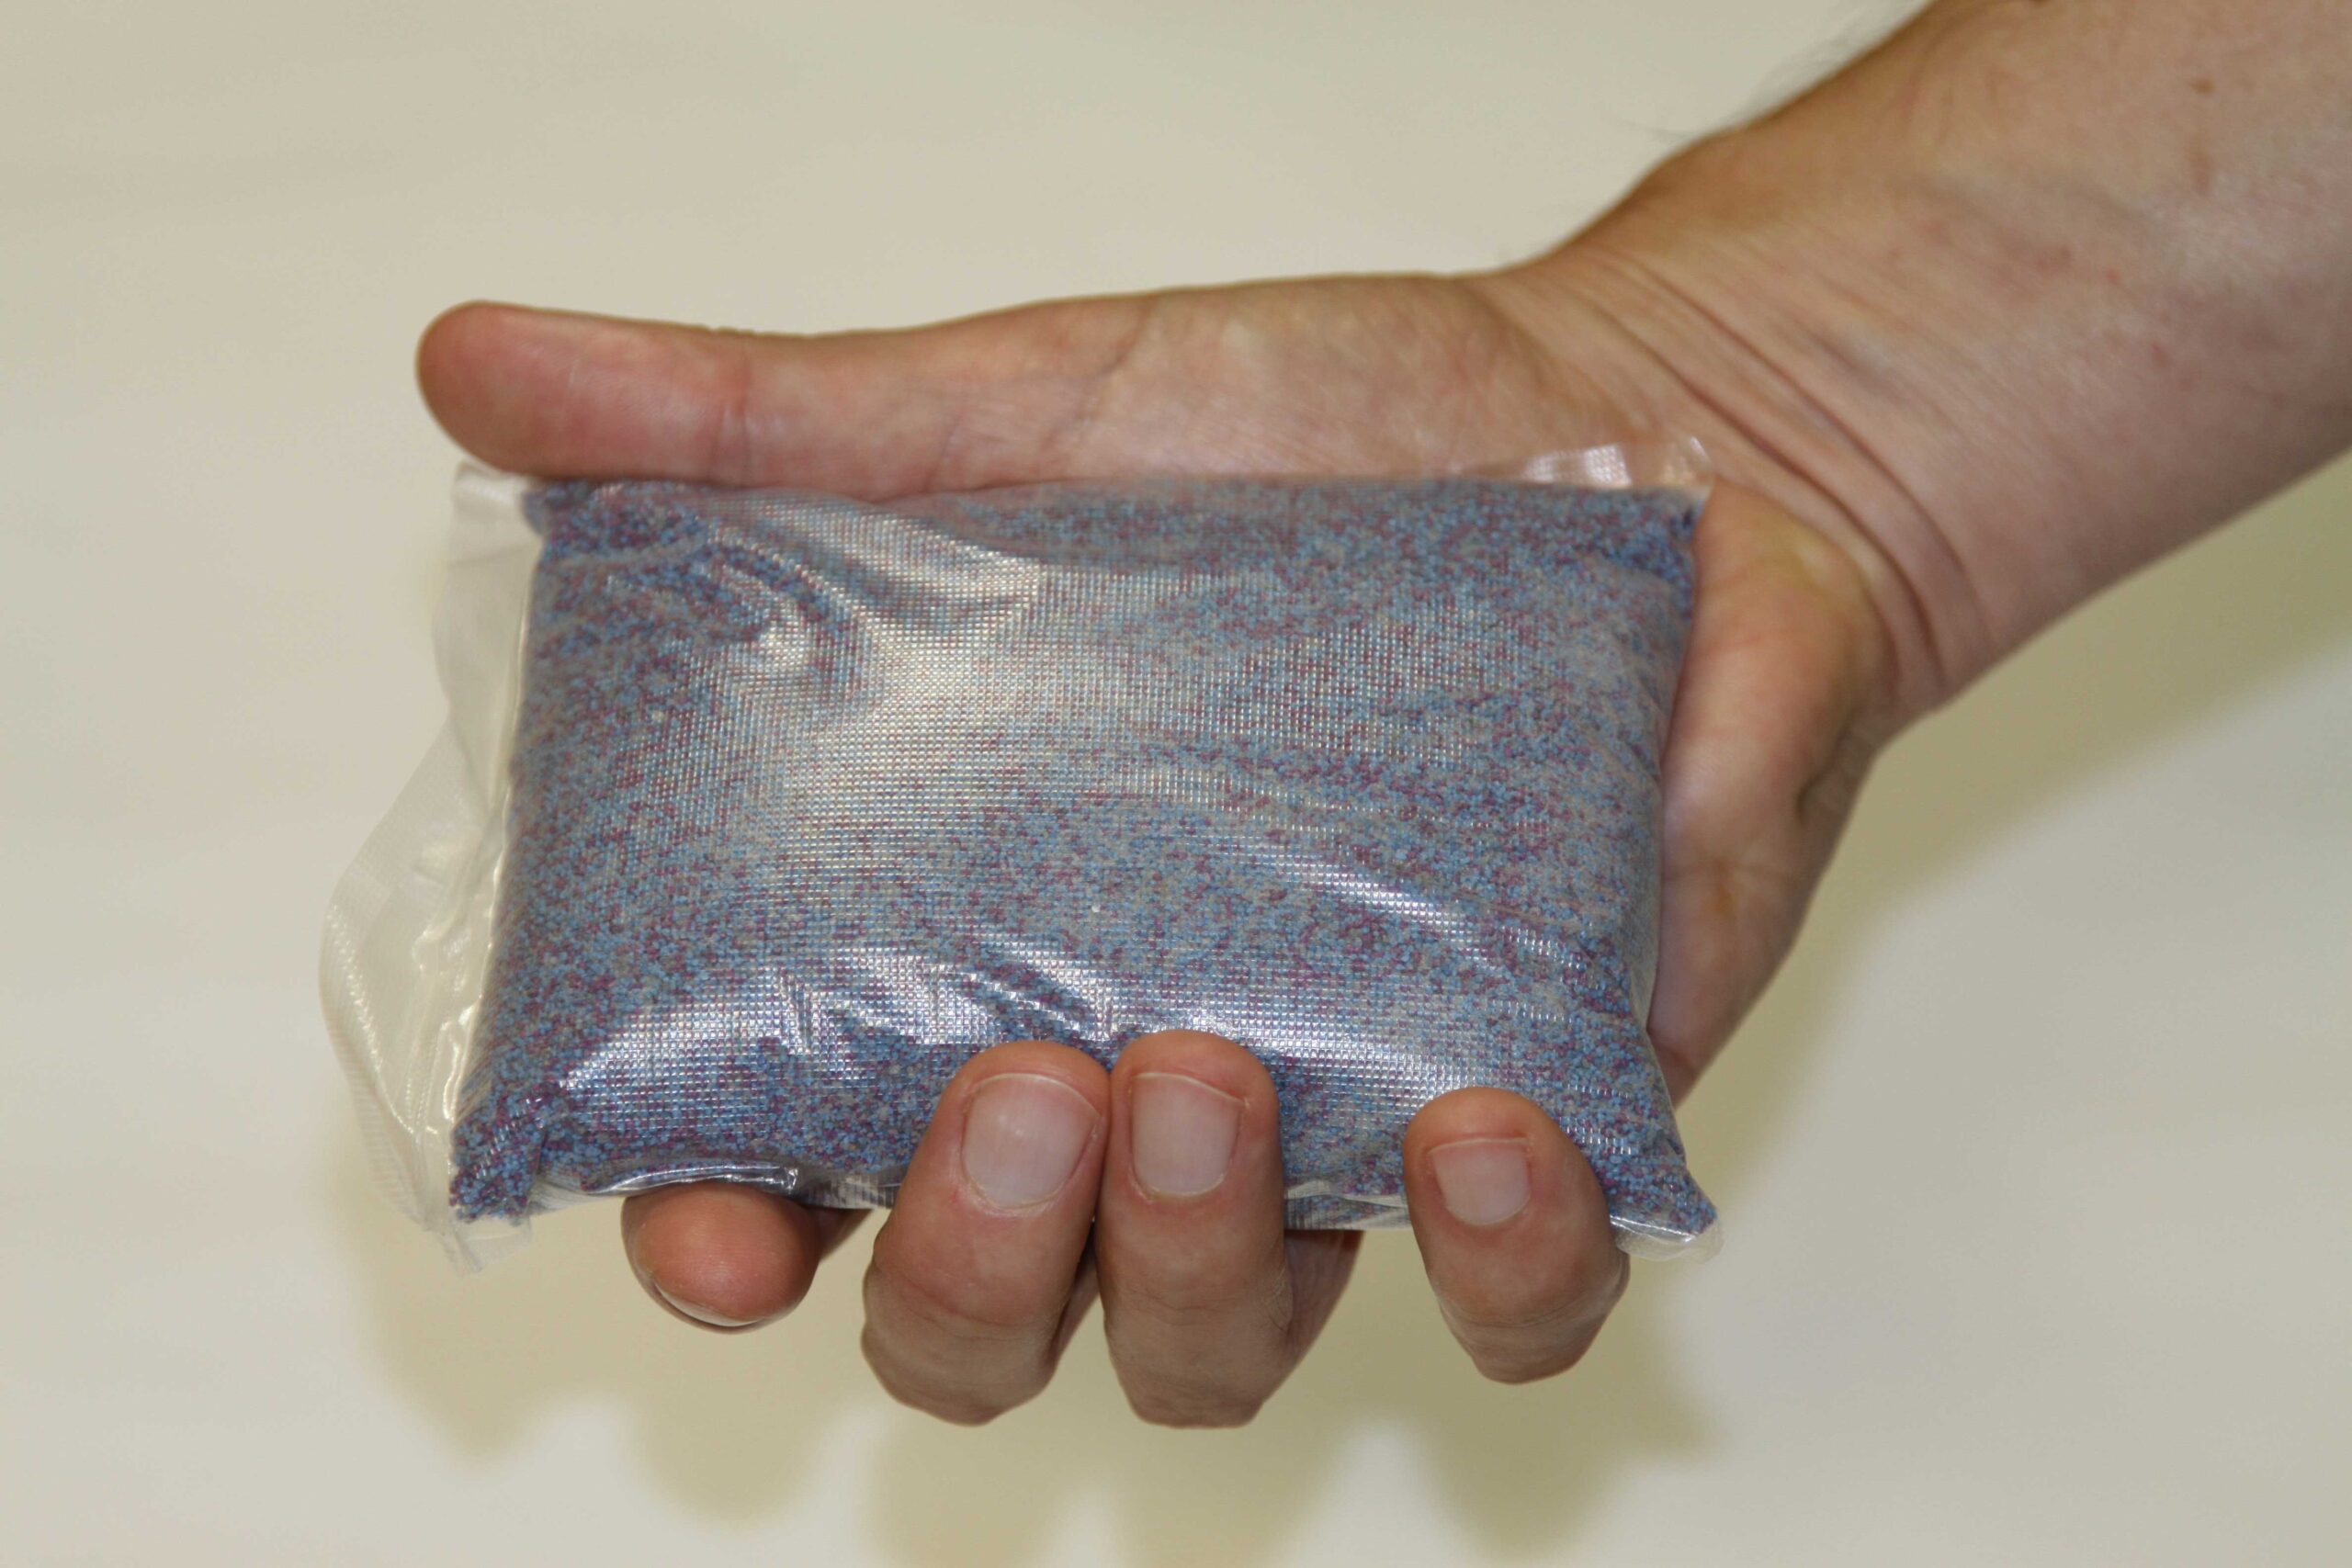 A hand holding a bag of grain-like substance 